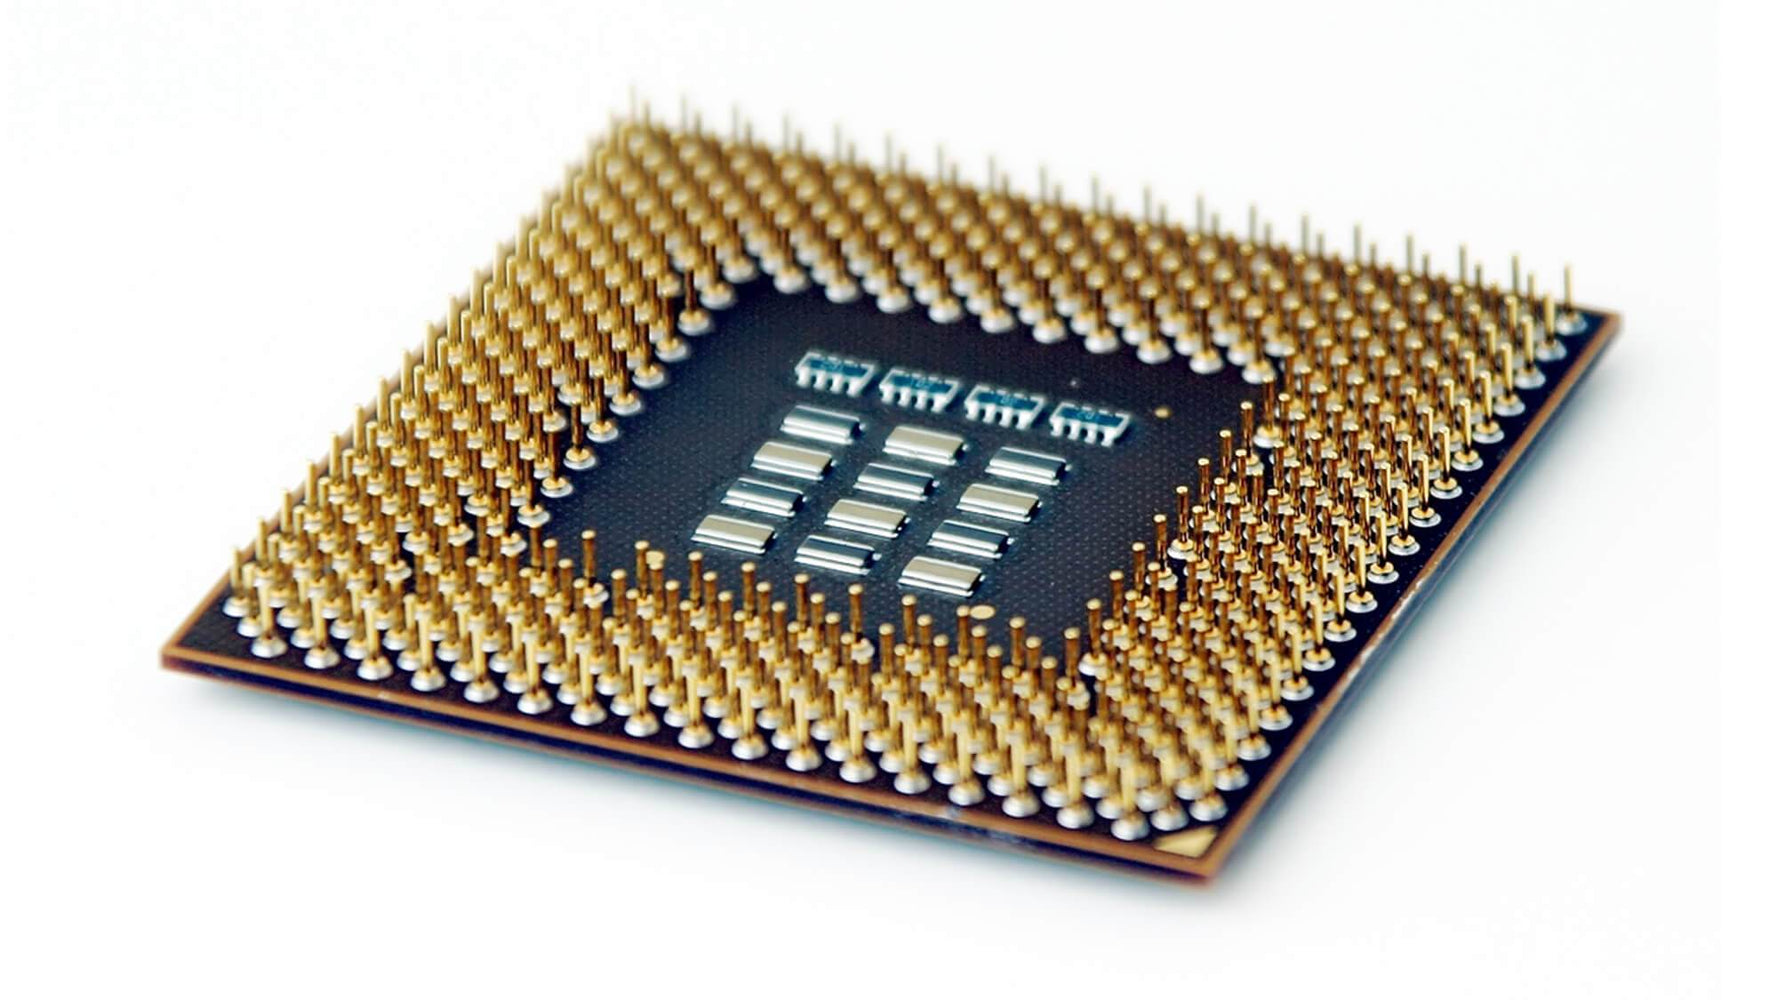 BX80623G870-C3 - Intel Pentium G870 2-Core 3.10GHz 5GT/s DMI 3MB SmartCache Socket LGA1155 Processor